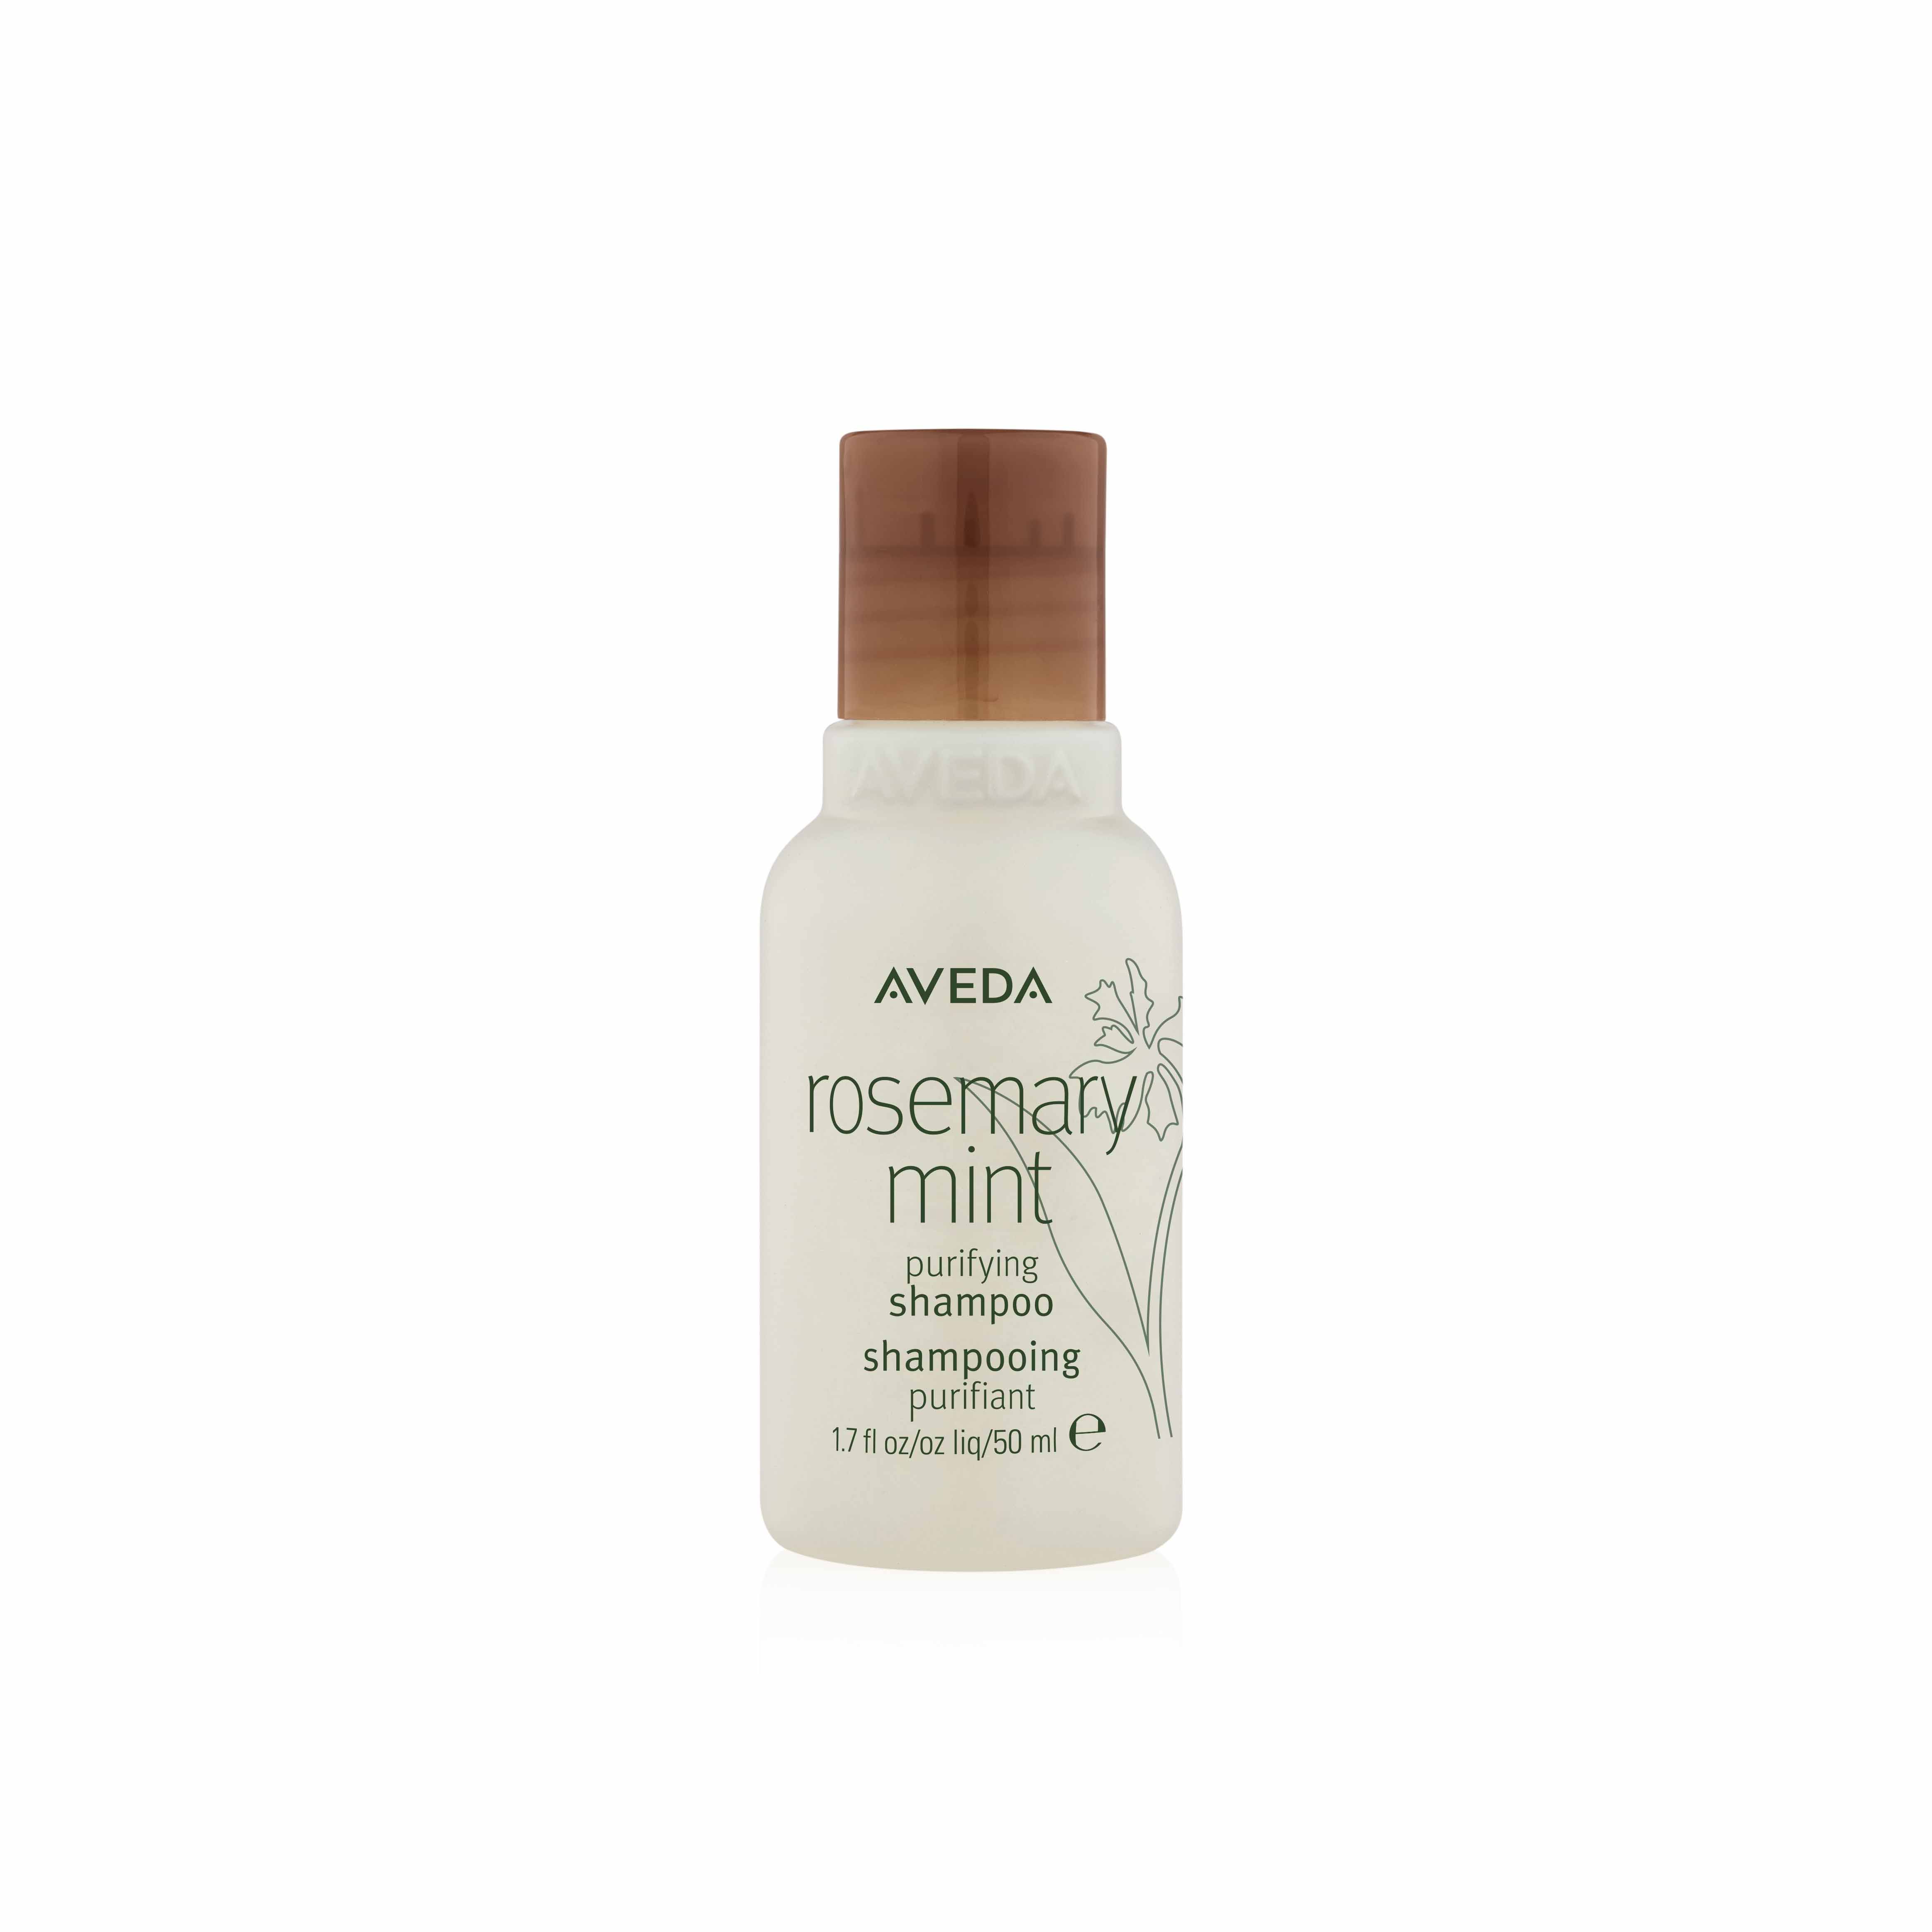 https://av-dashop.nl/wp-content/uploads/2020/11/Aveda-rosemary-mint-purifying-shampoo-50ml.jpg